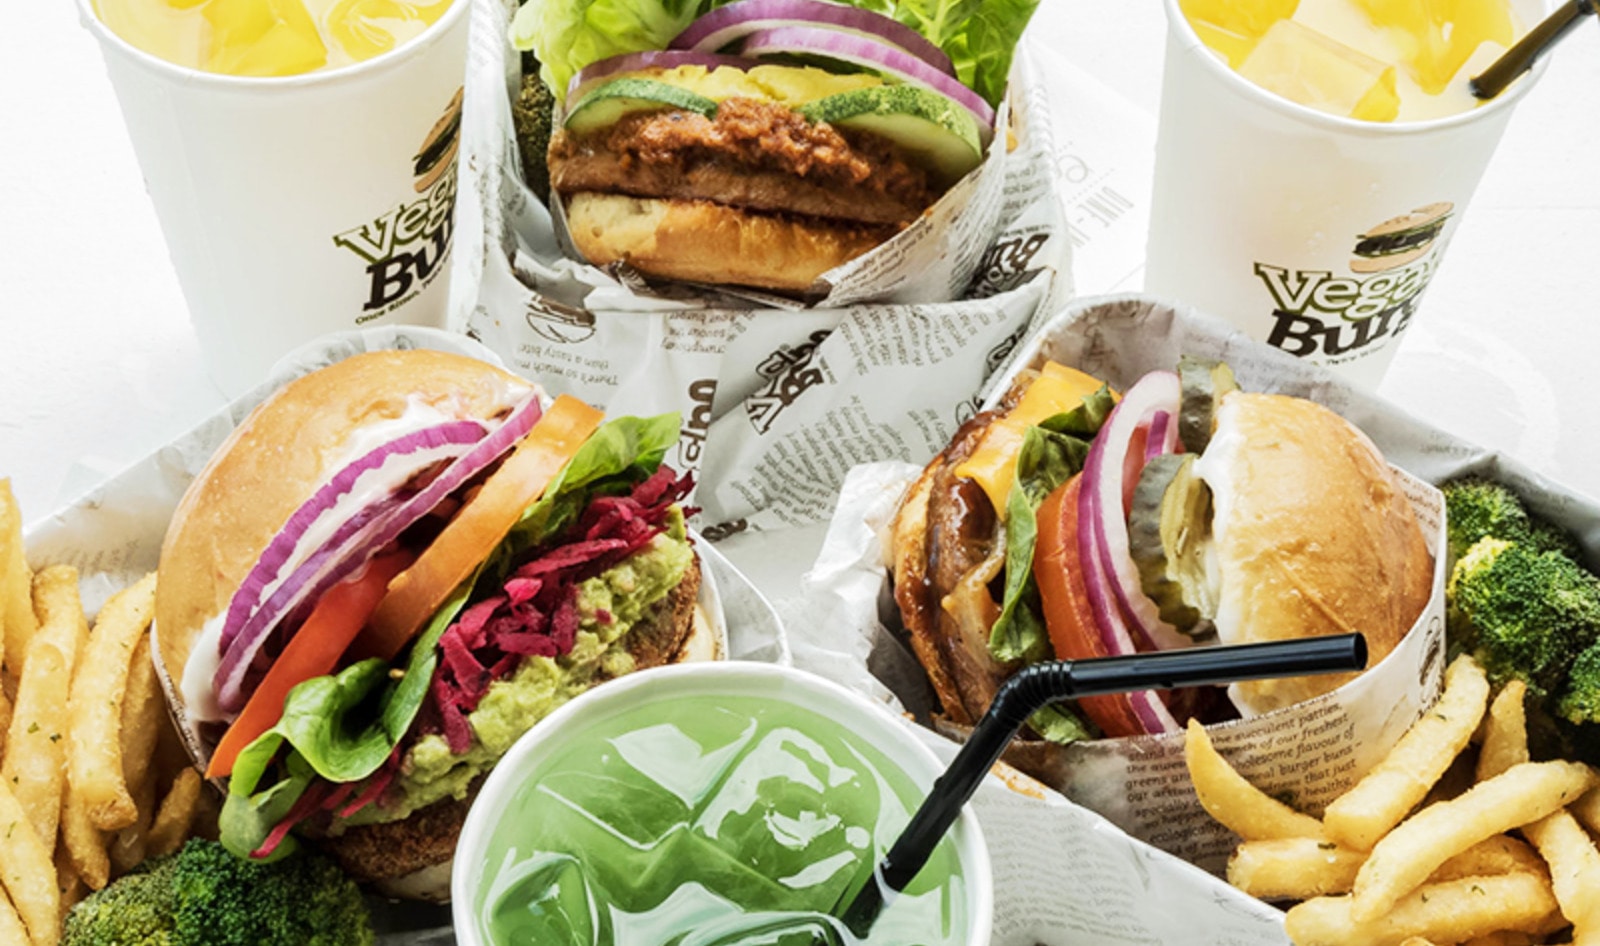 Vegan Burger Shop VeganBurg Embarks on an Expansion to Indonesia